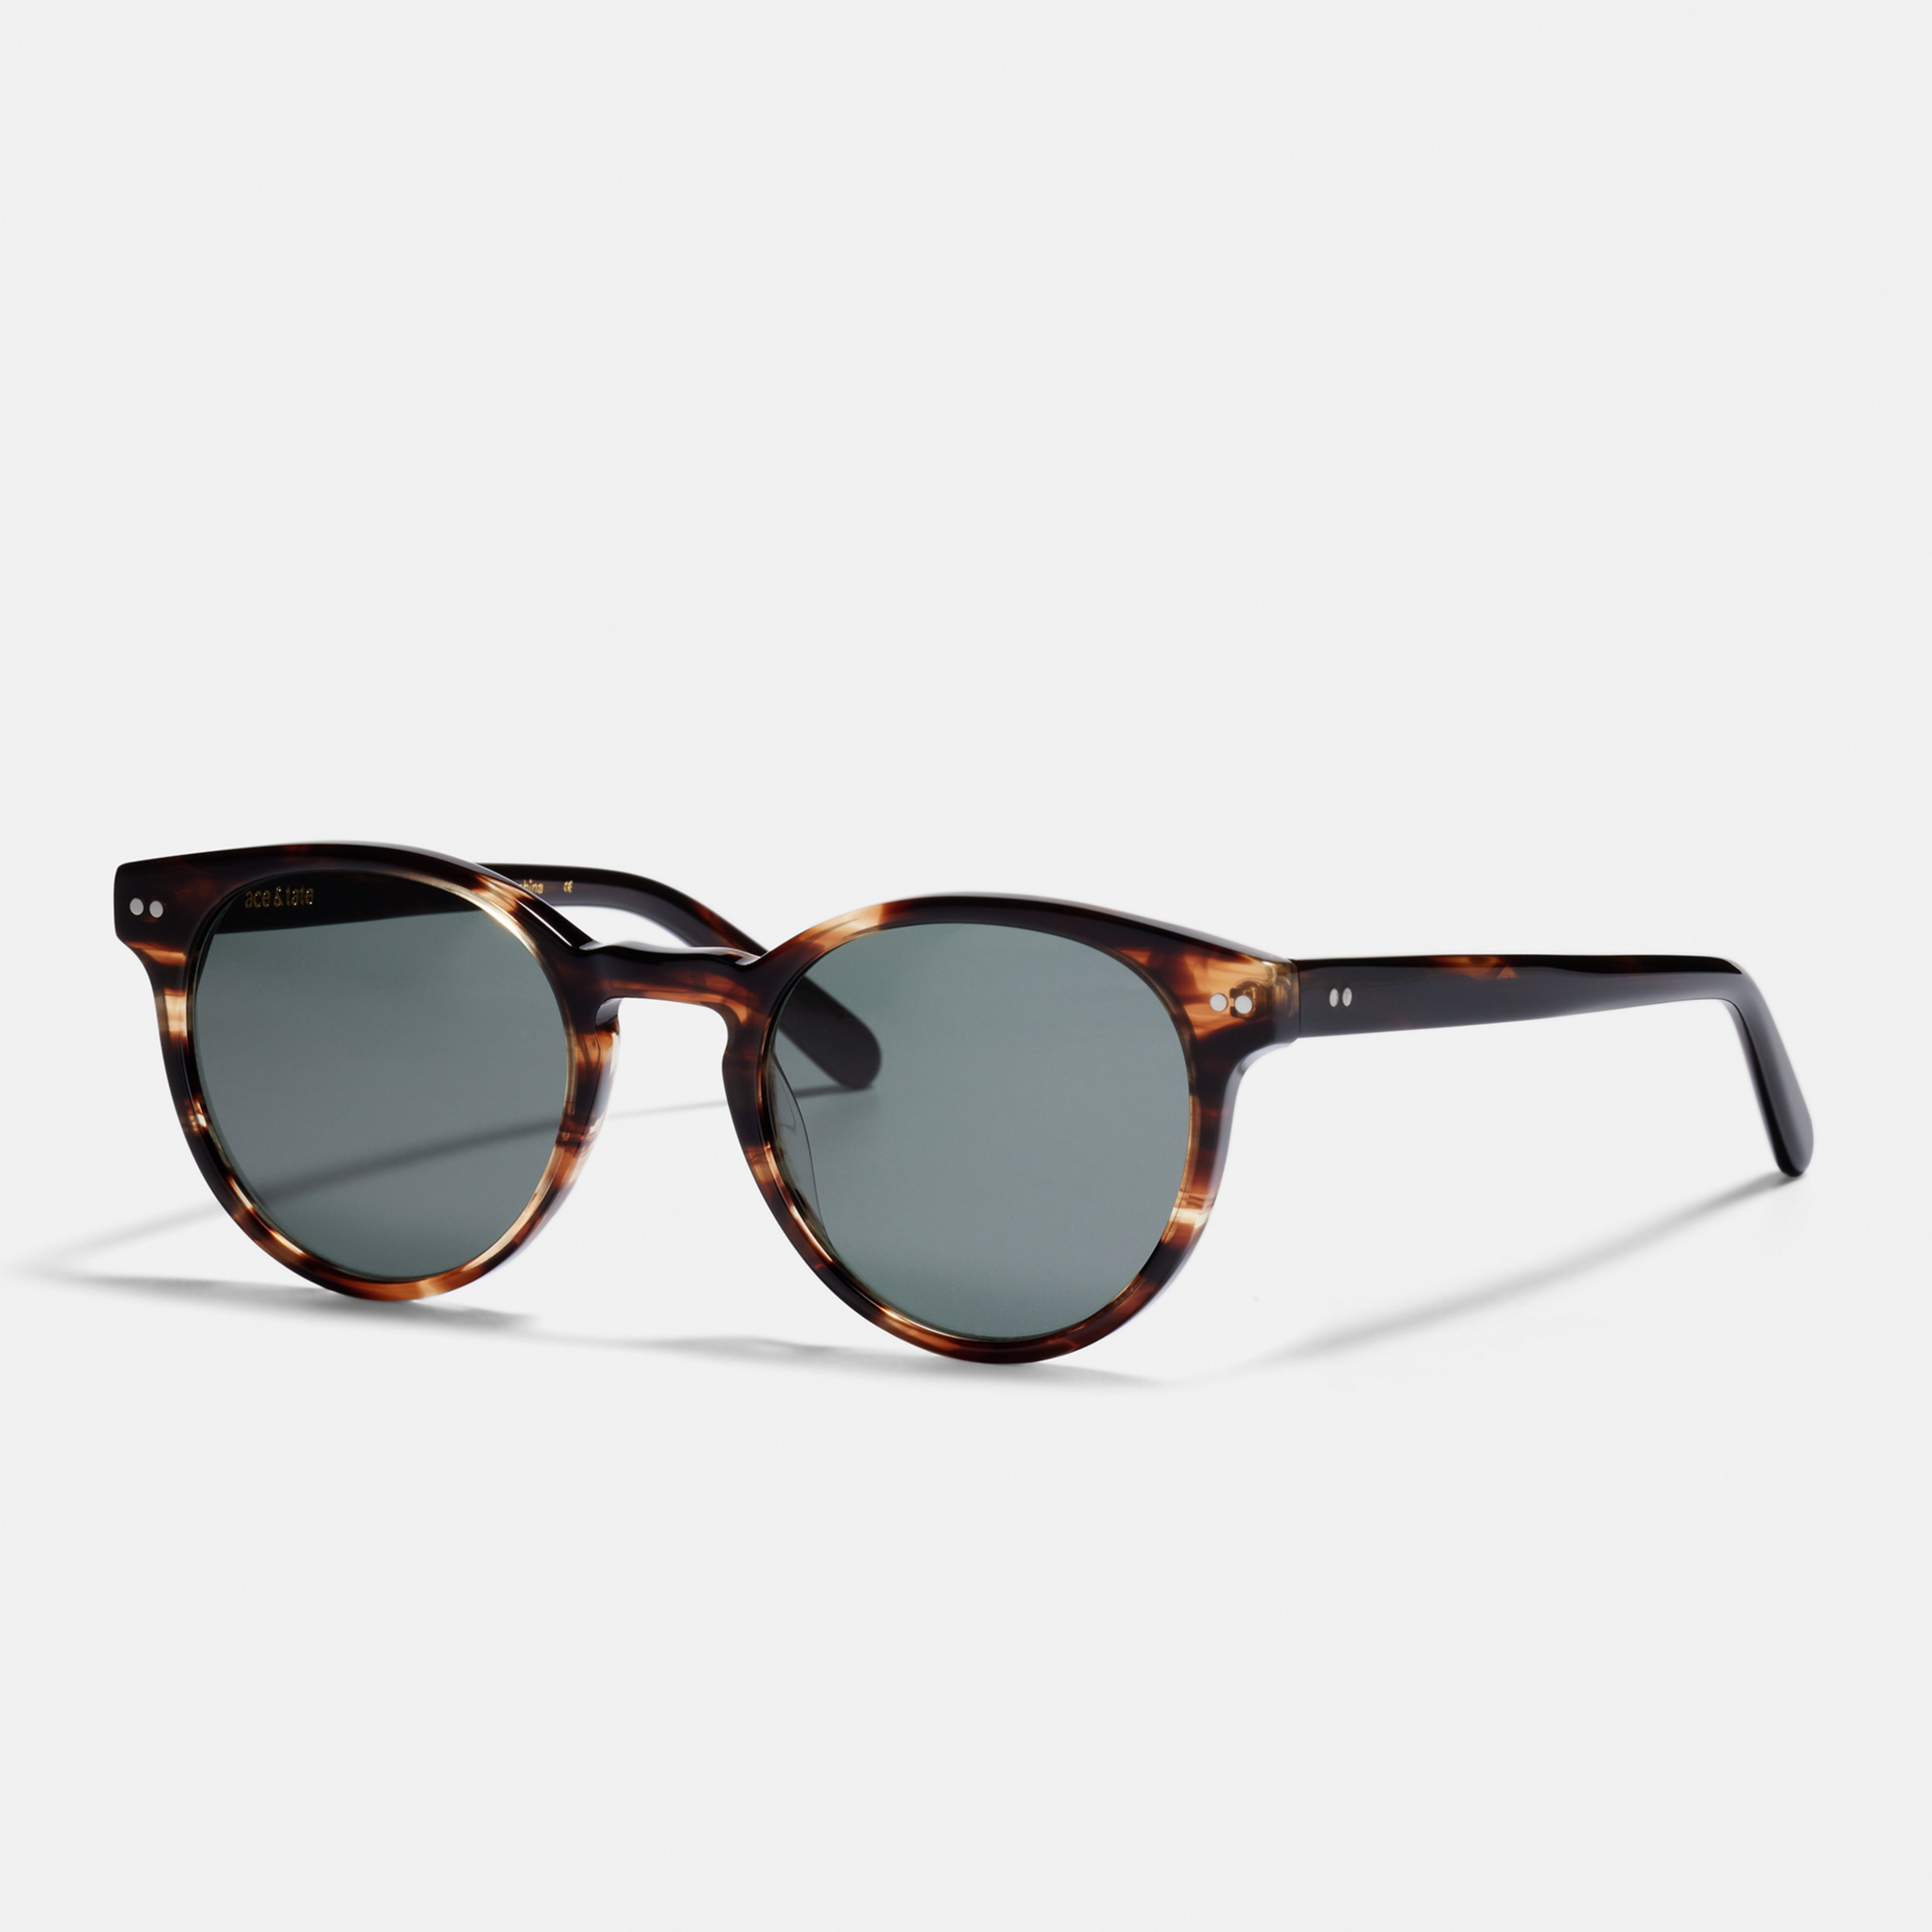 Ace & Tate Sunglasses | Round Acetate in Brown, Orange